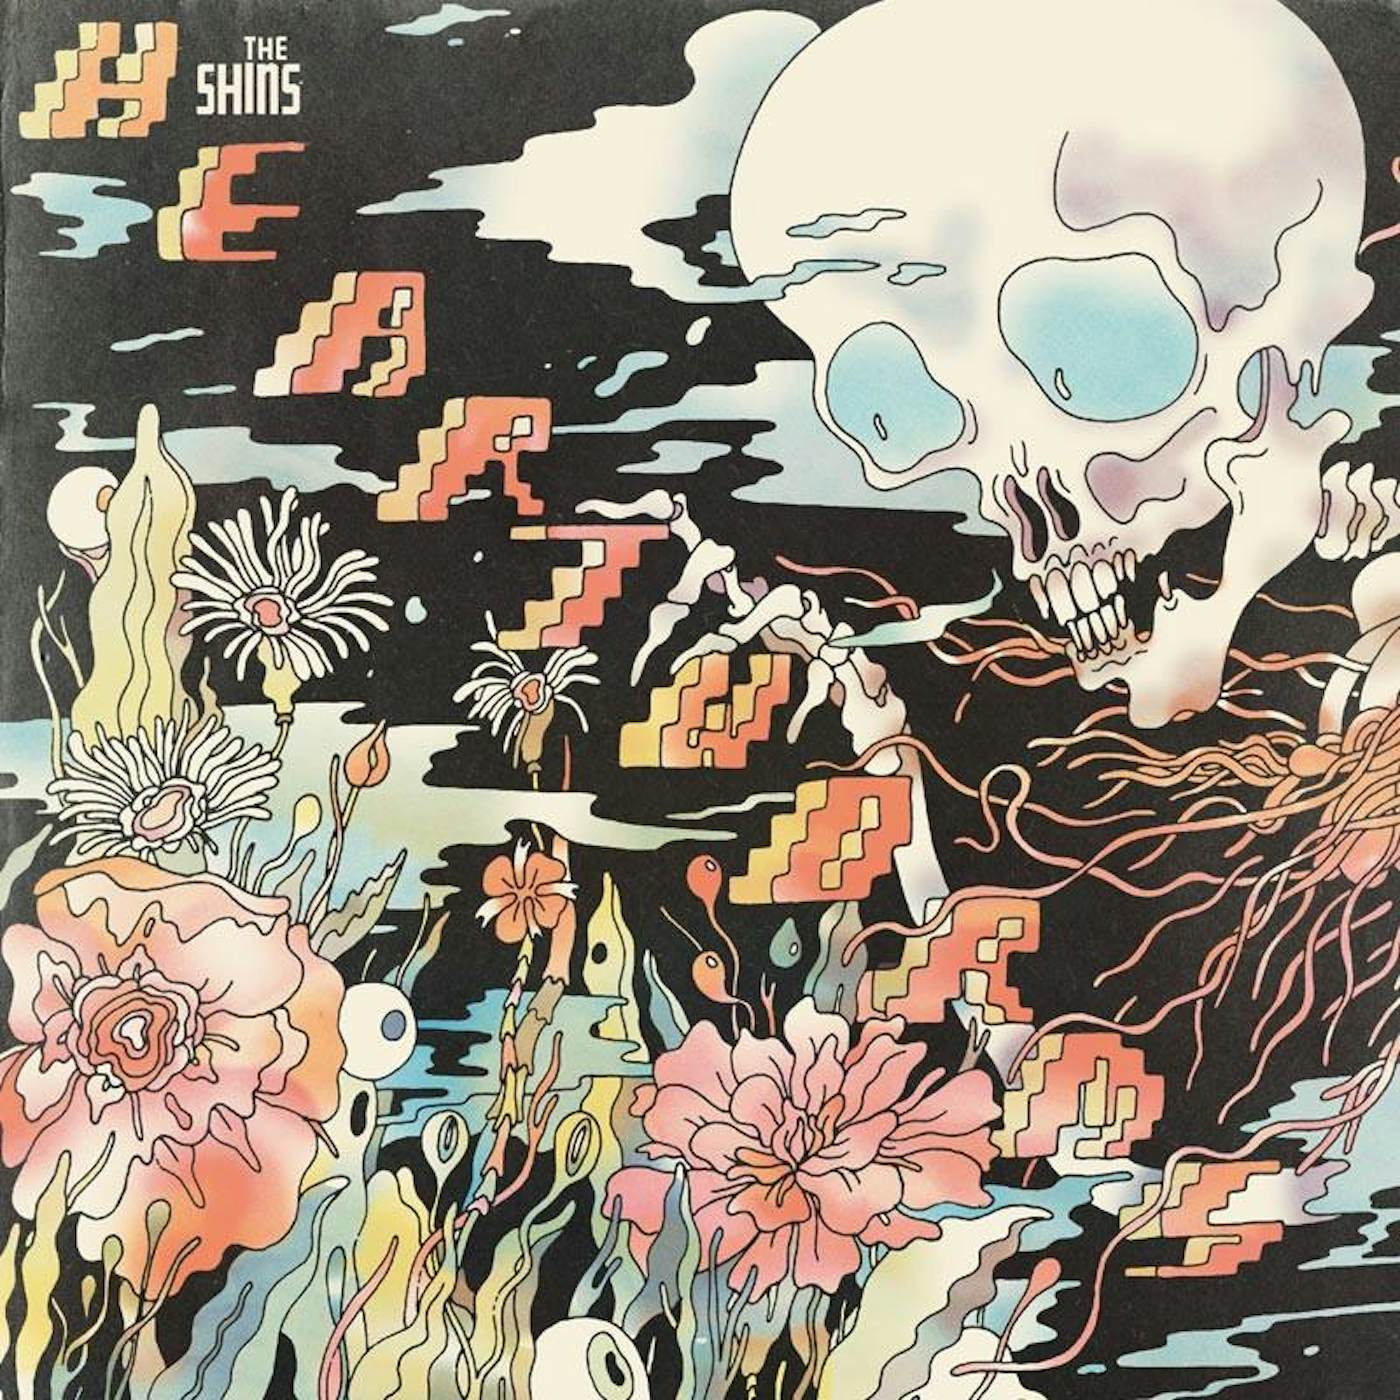 THE SHINS HEATWORMS CD/LP/DIGITAL (Vinyl)